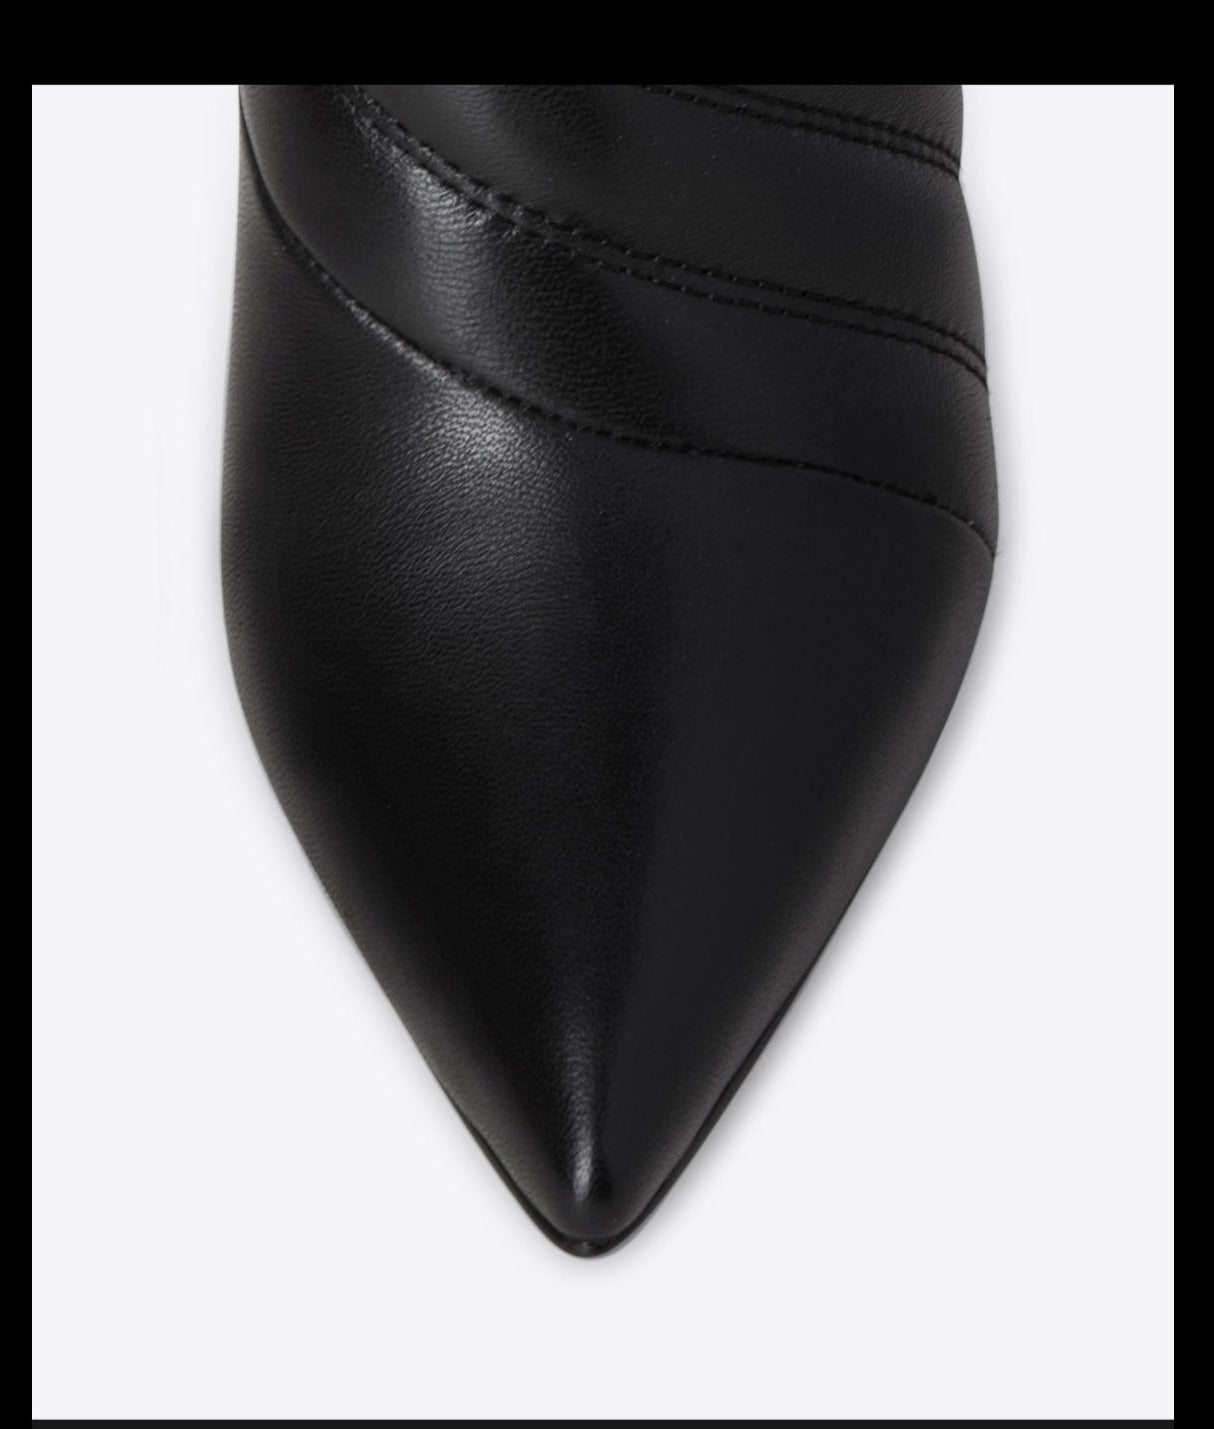 Fabfei pointed toe black high-heeled boots - Iloa